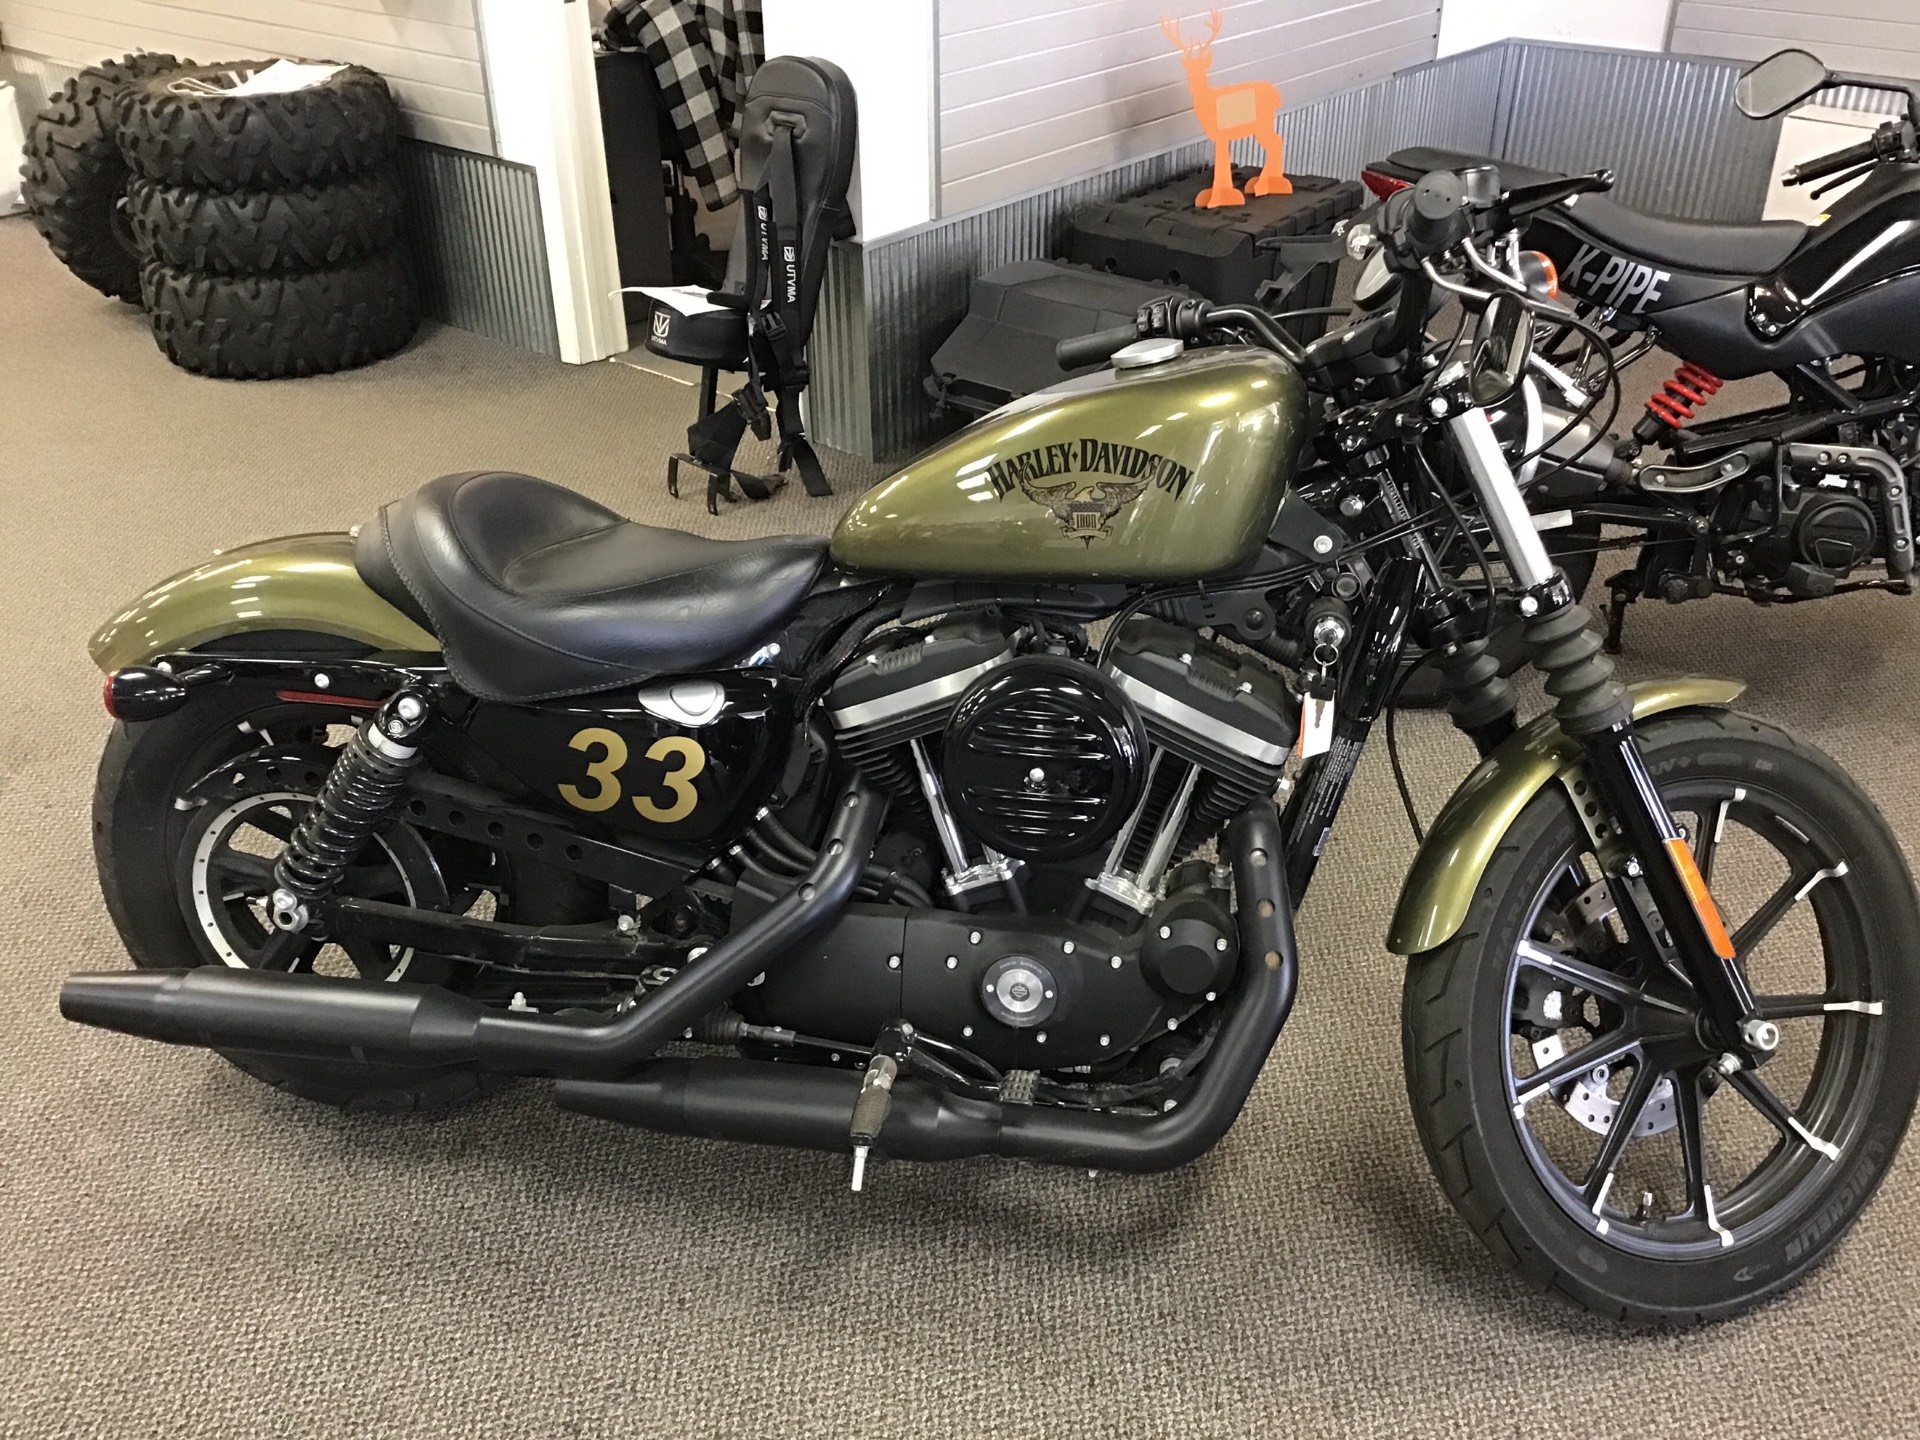 2017 Harley-Davidson Sportster 883 in Sterling, Illinois - Photo 2